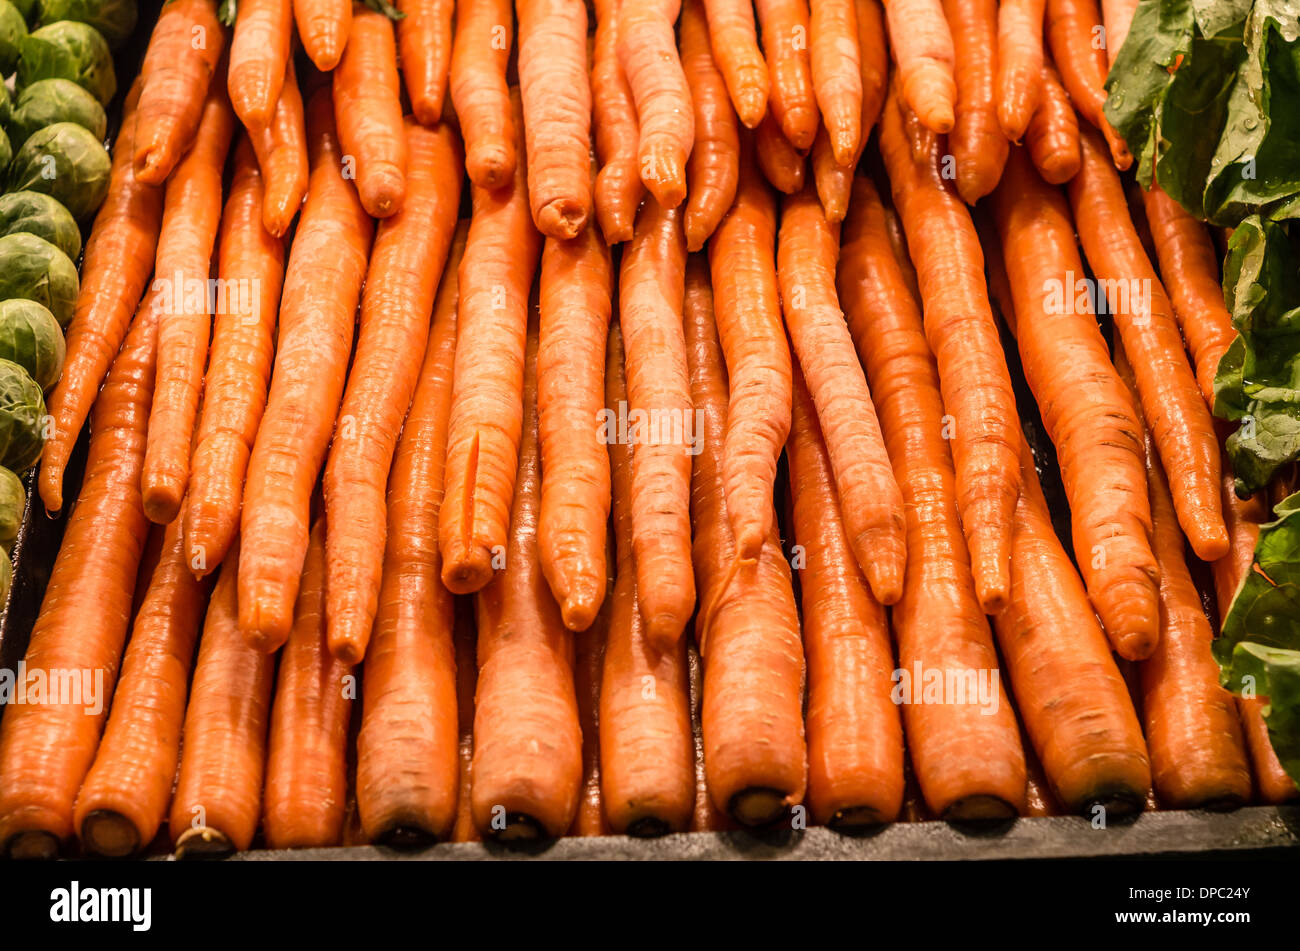 Bulk display of orange carrots at a produce vendor market stall.  Pike Place Market, Seattle, Washington, USA Stock Photo